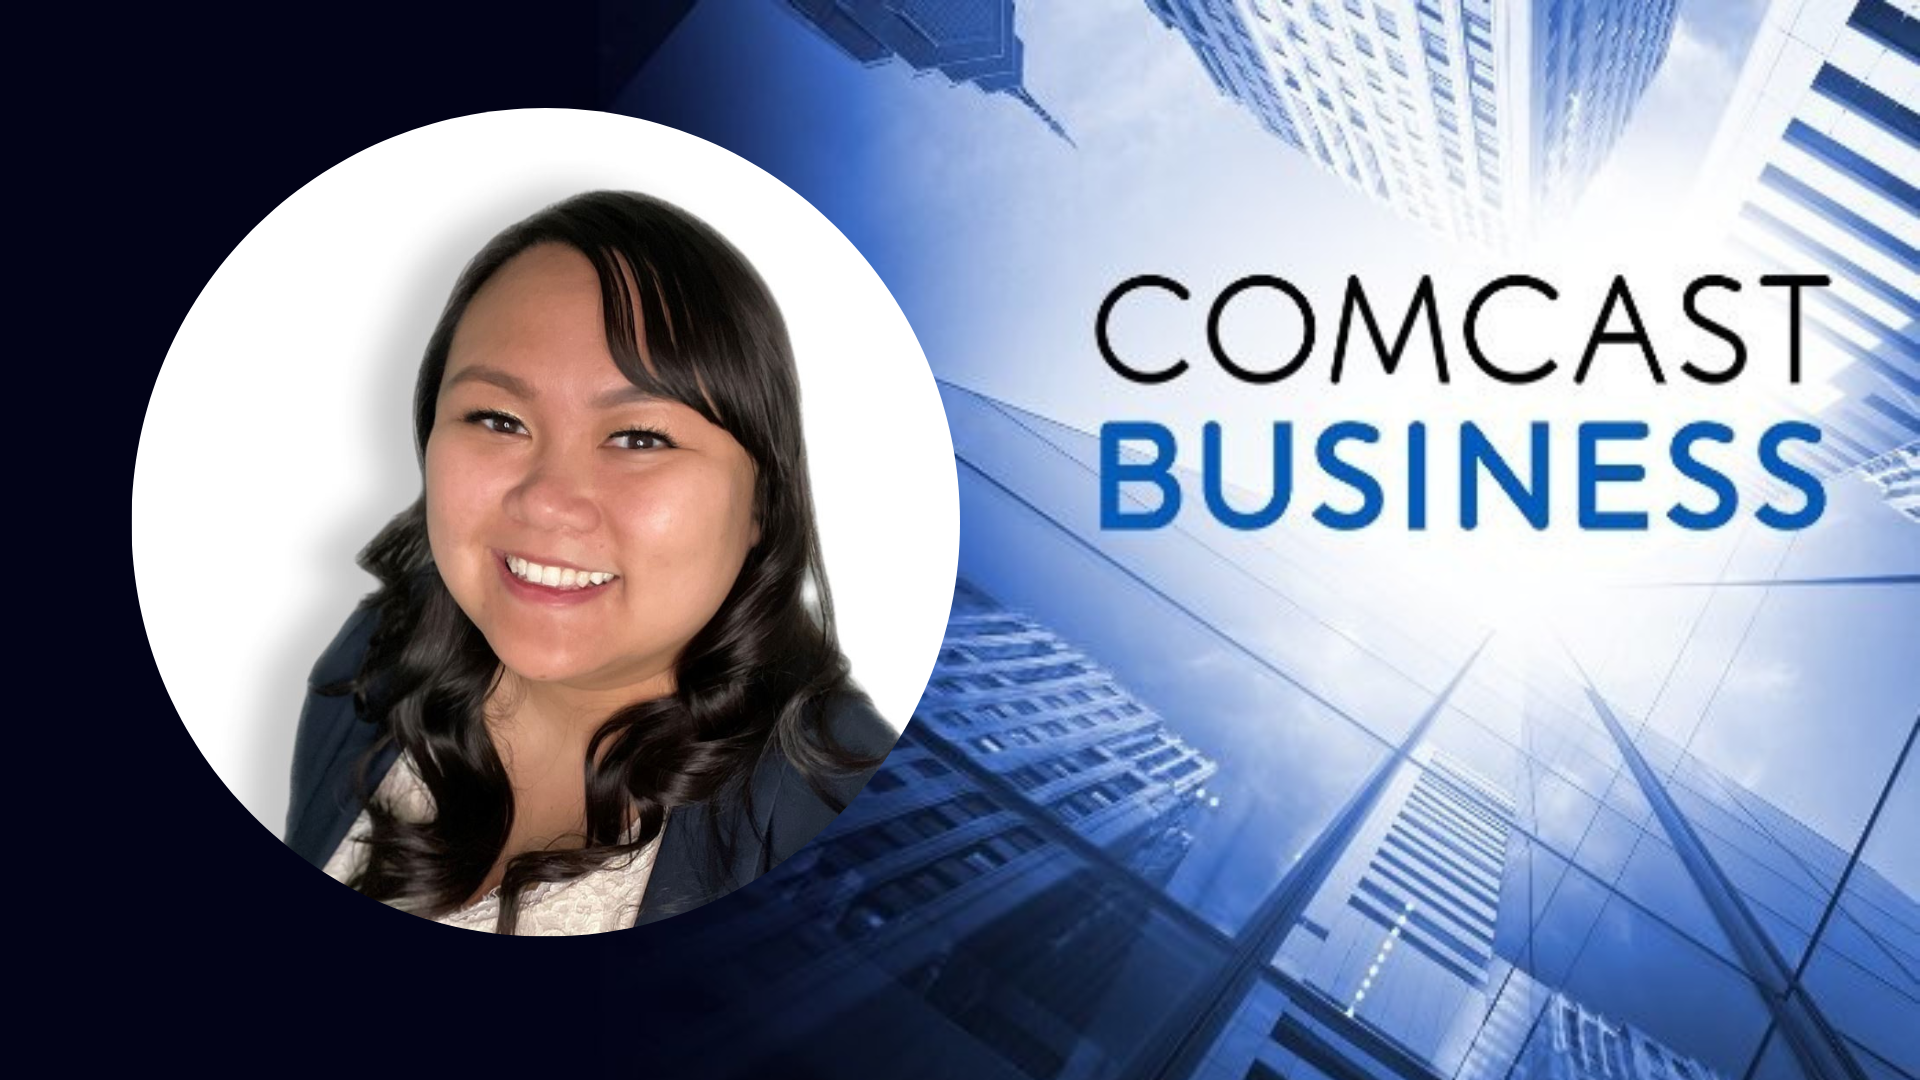 Our Voices: Meet Princess, Strategic Enterprise Account Manager with Comcast Business